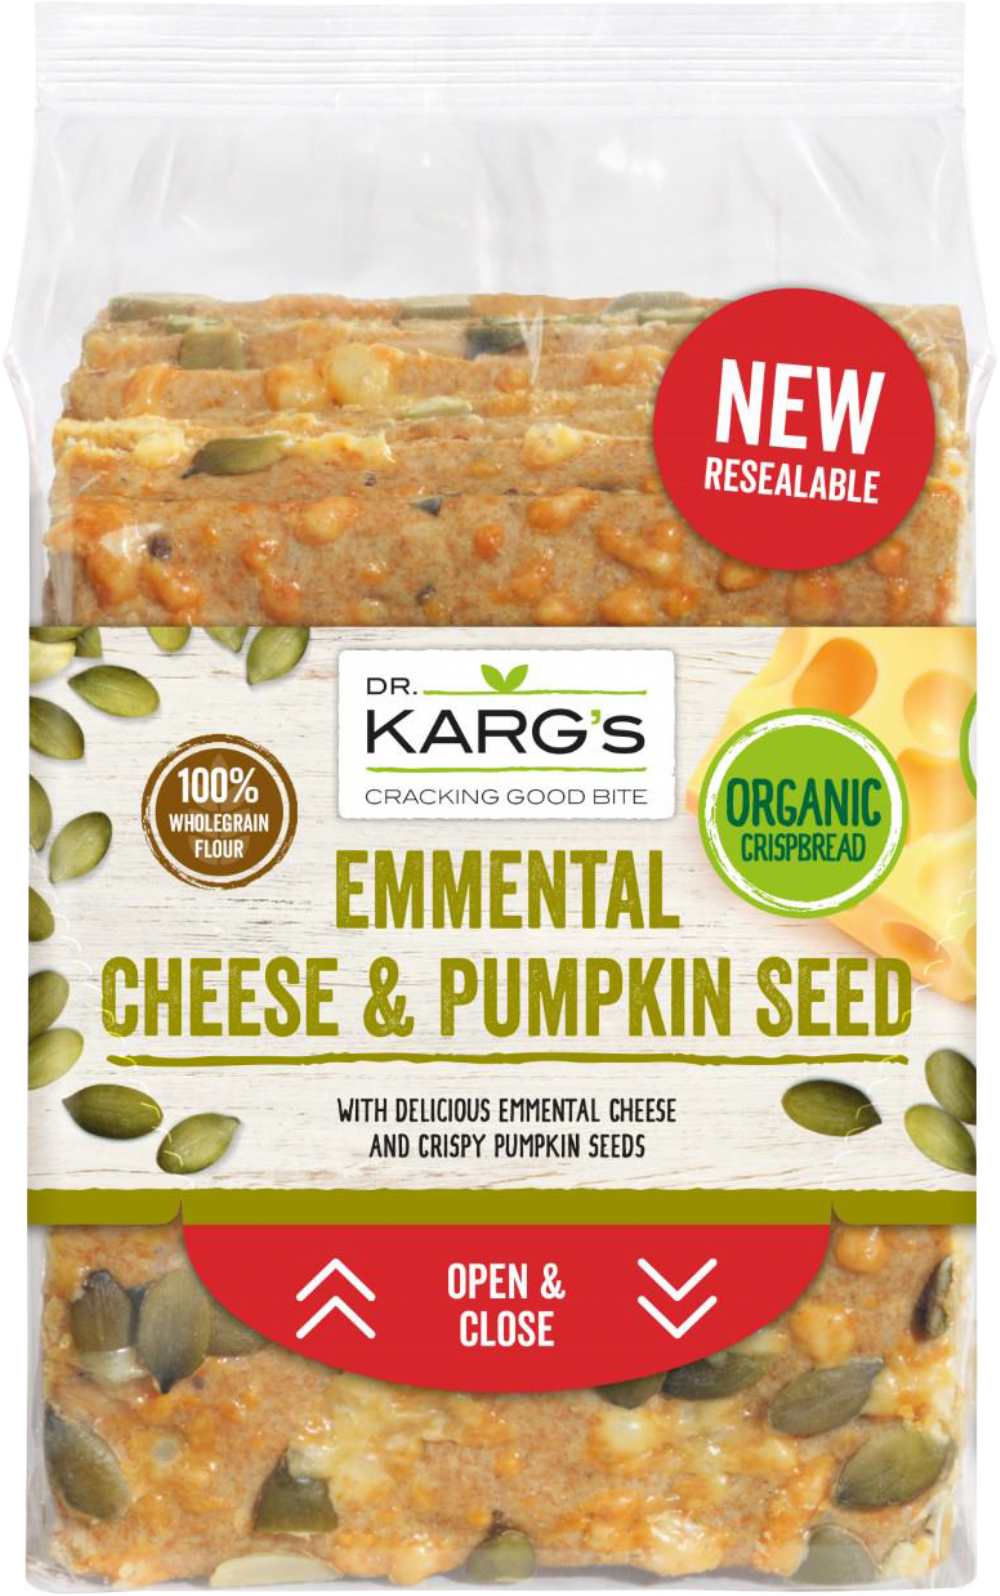 DR. KARG'S Emmental Cheese & Pumpkin Seed Crispbread 200g